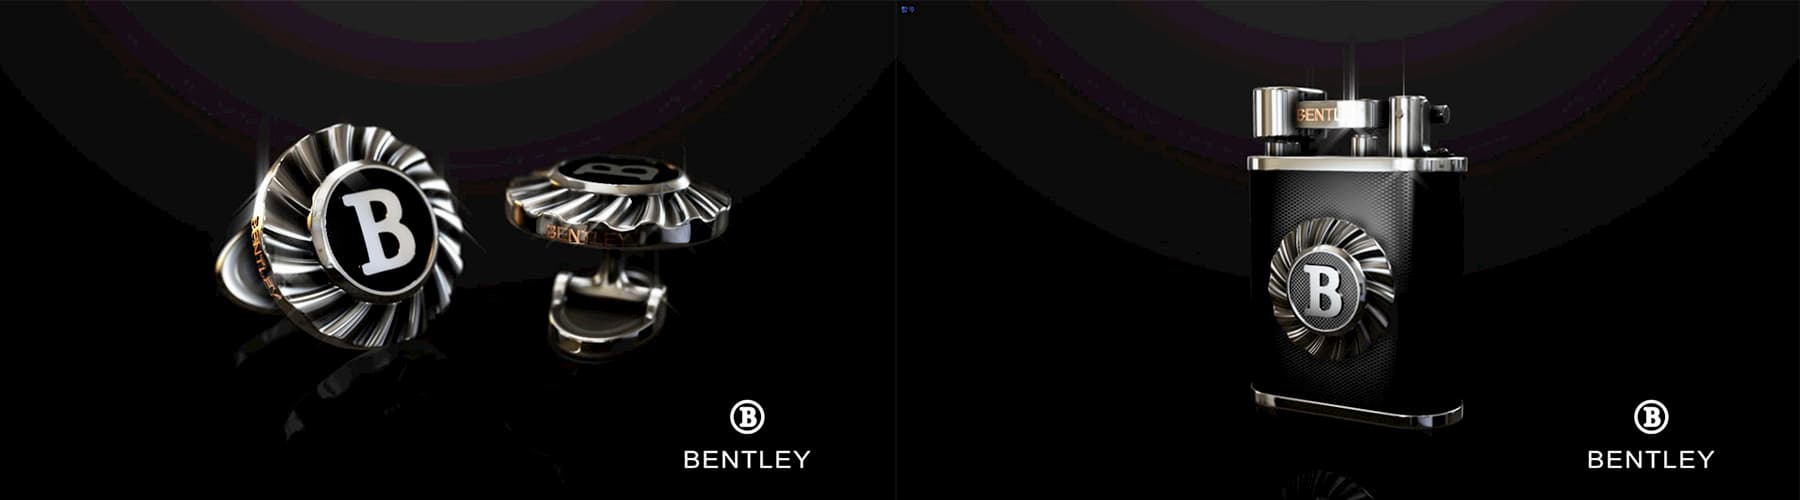 BENTLEY品牌形象3D動畫影片-2